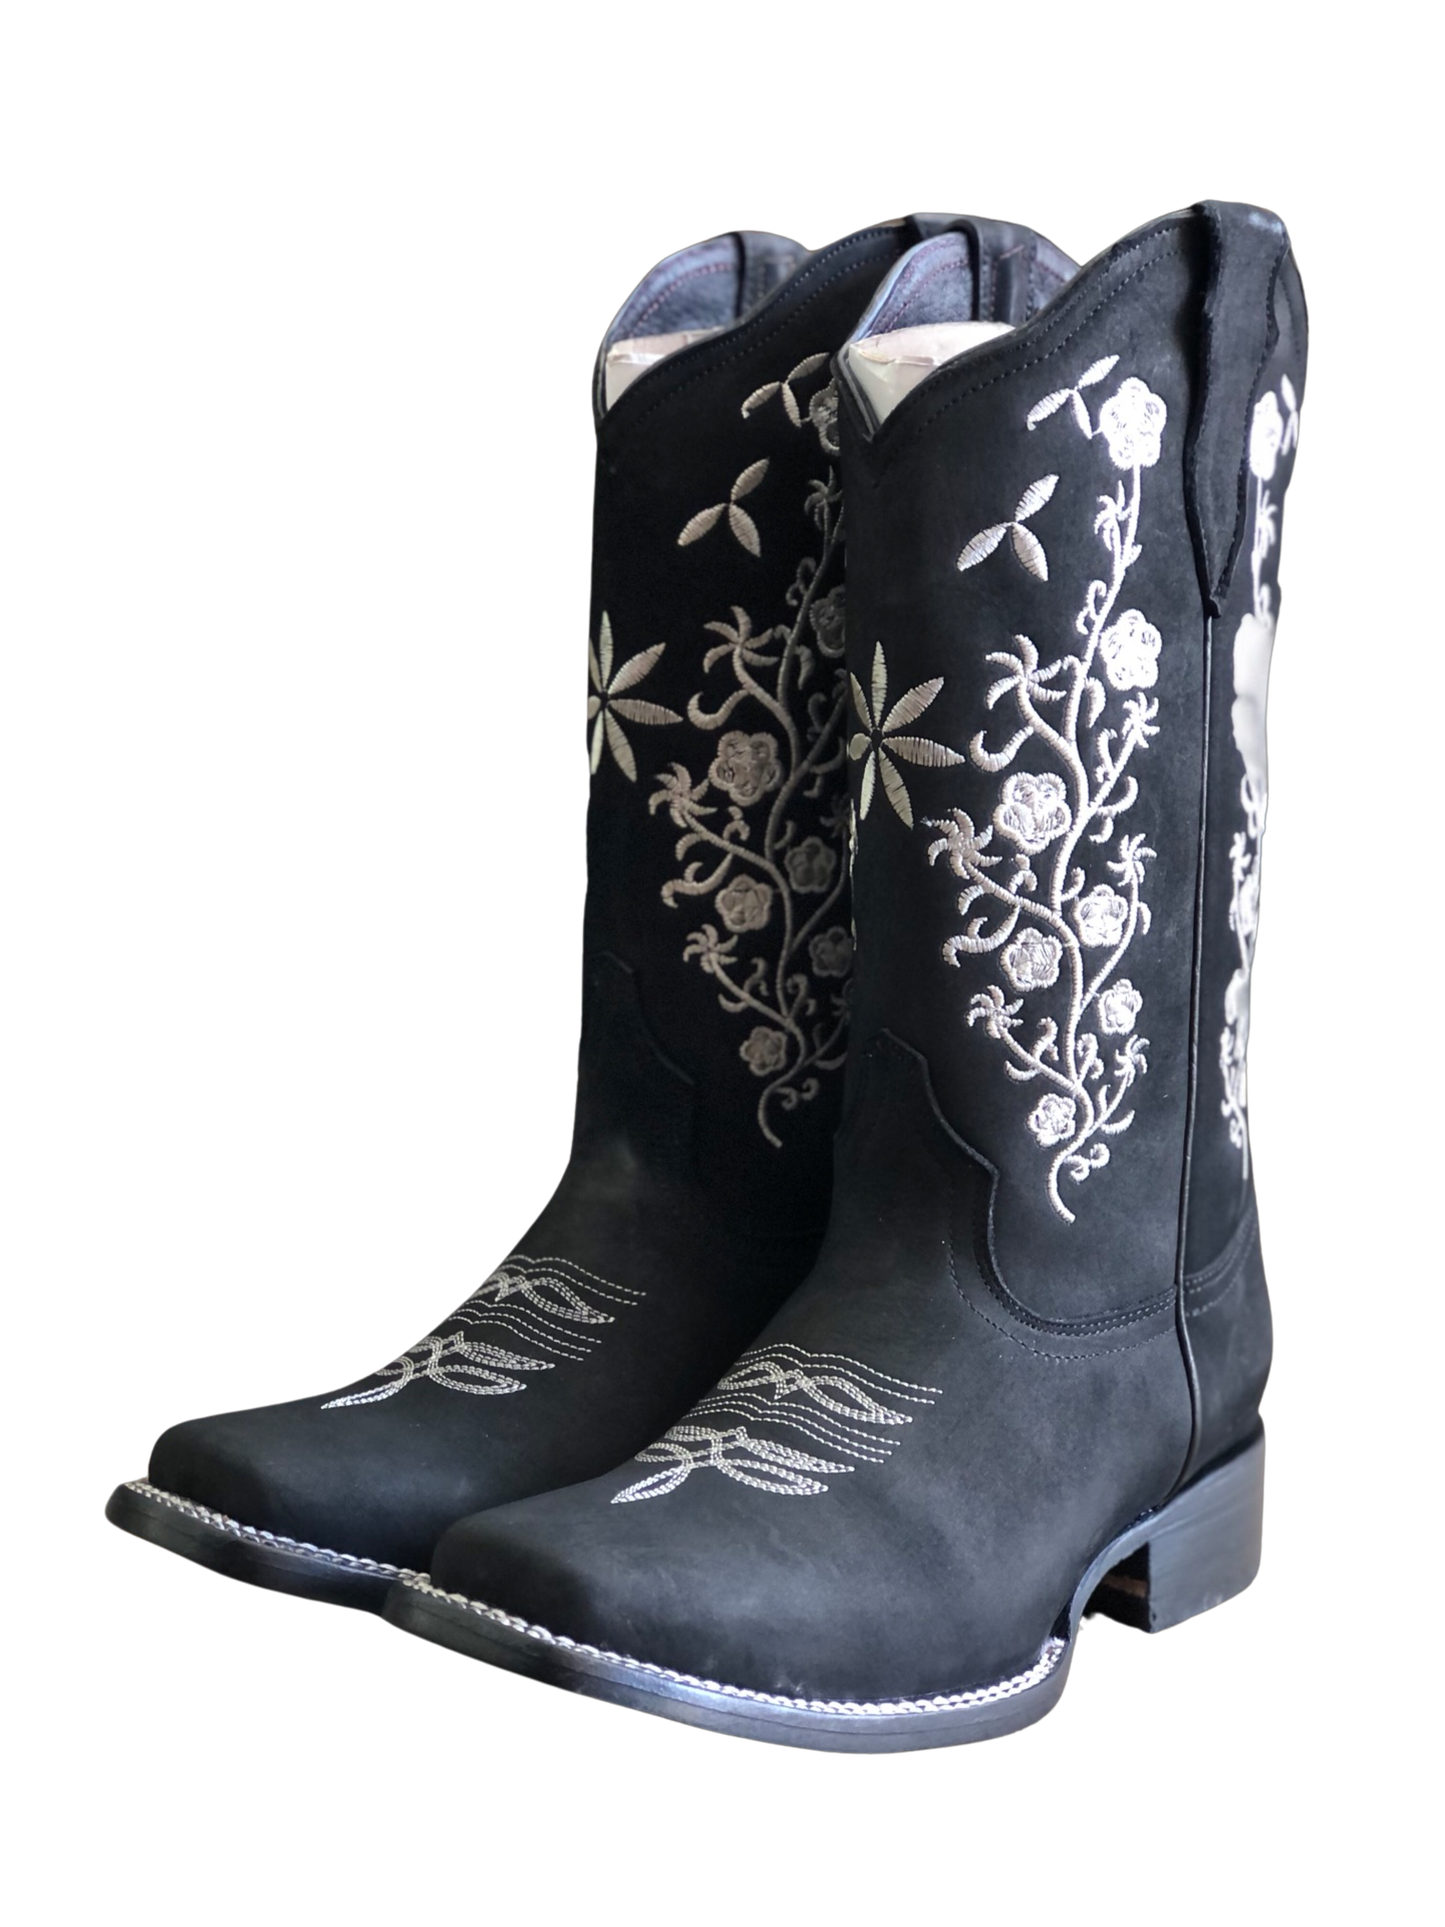 Botas Vaqueras de Mujer - Women’s Cowgirl Boots - La Sierra Boots